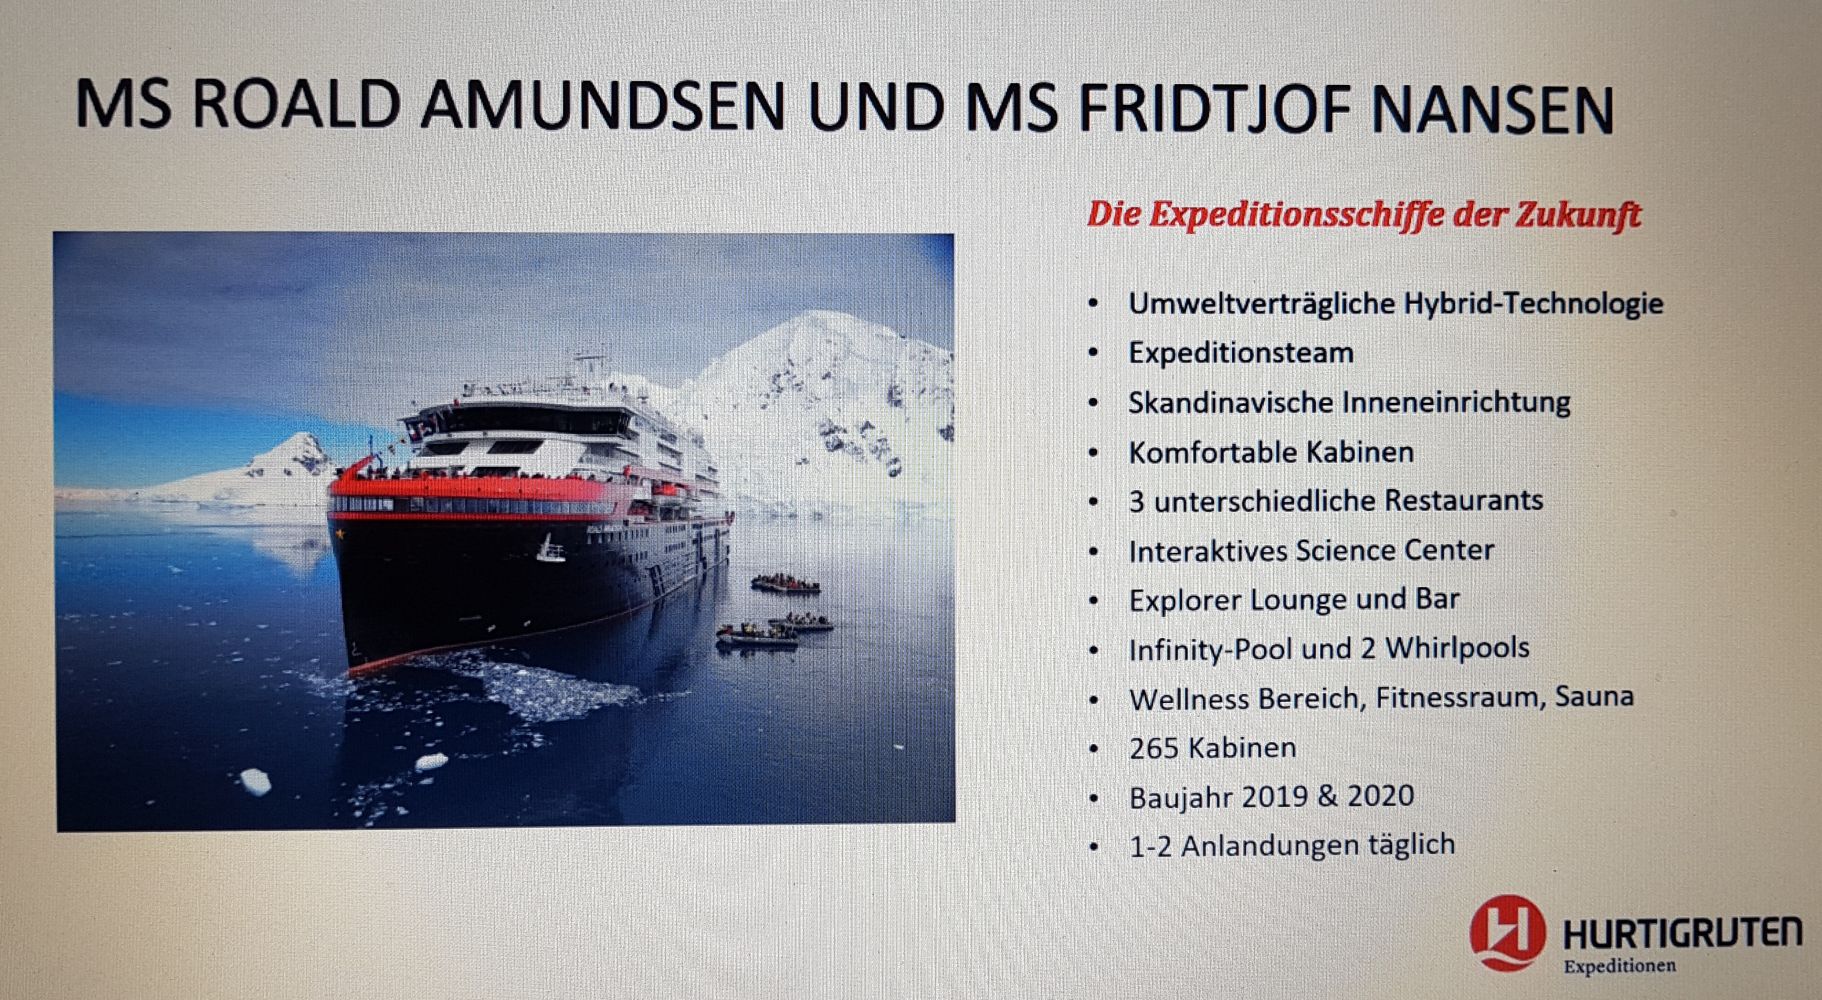 Hurtigruten_Expeditionskreuzfahrten_Eindrücke_Anlandungen_Ausstattung (13).jpg